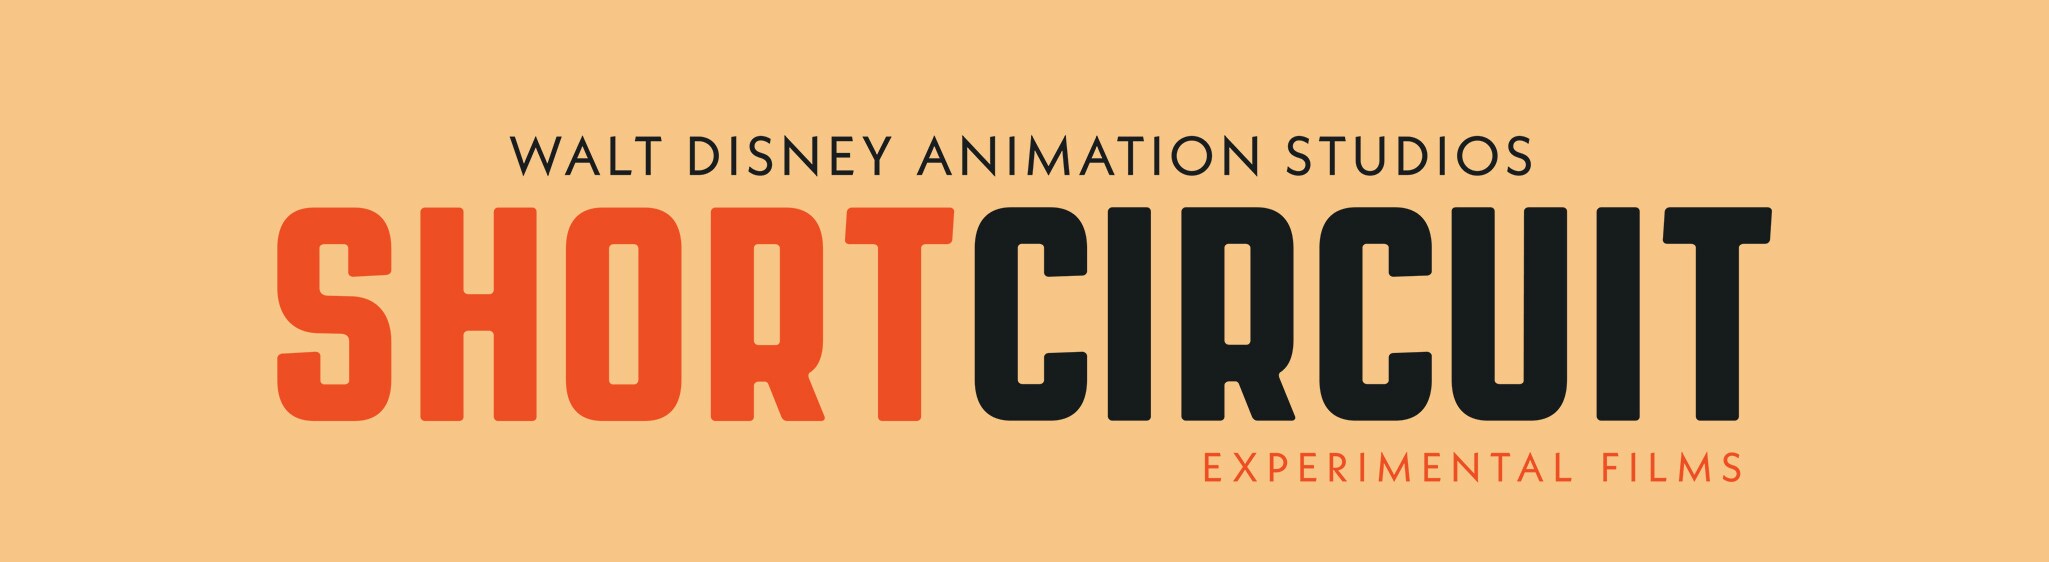 Walt Disney Animation Studios | Short Circuit| Experimental Films